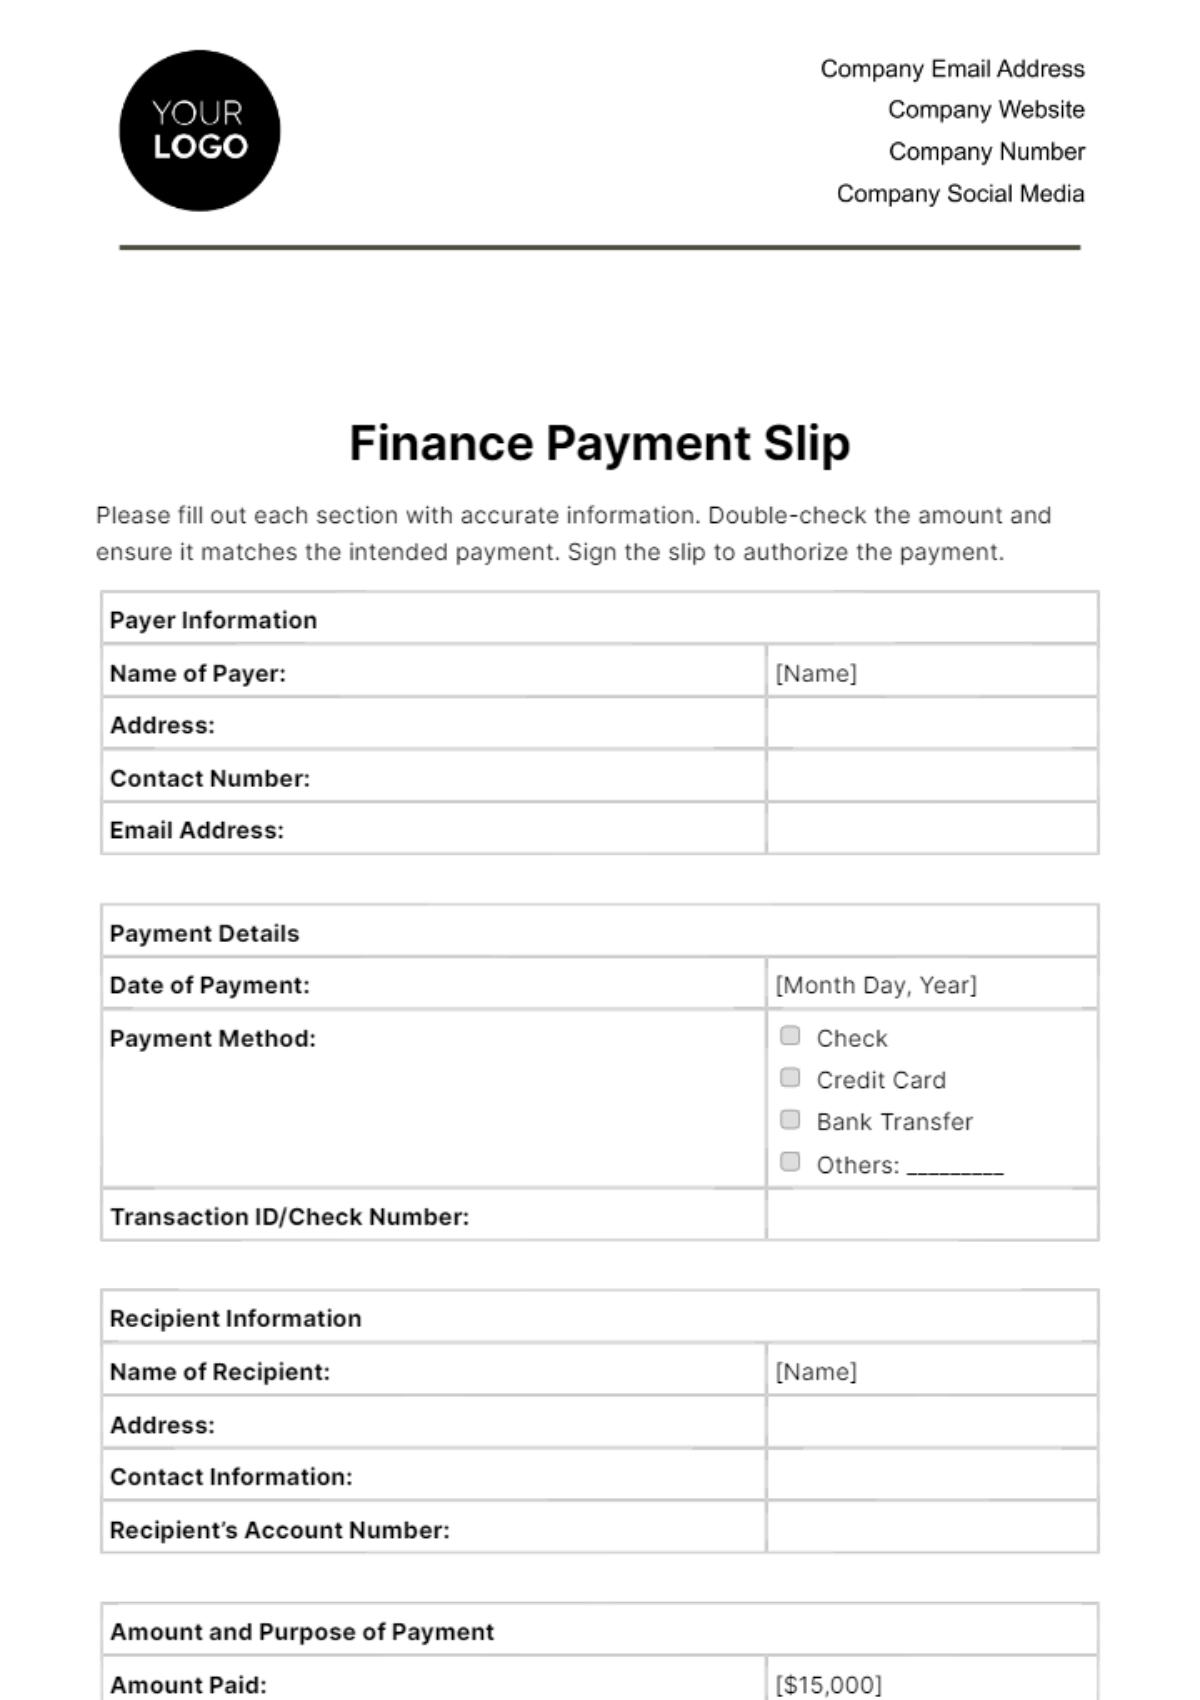 Finance Payment Slip Template